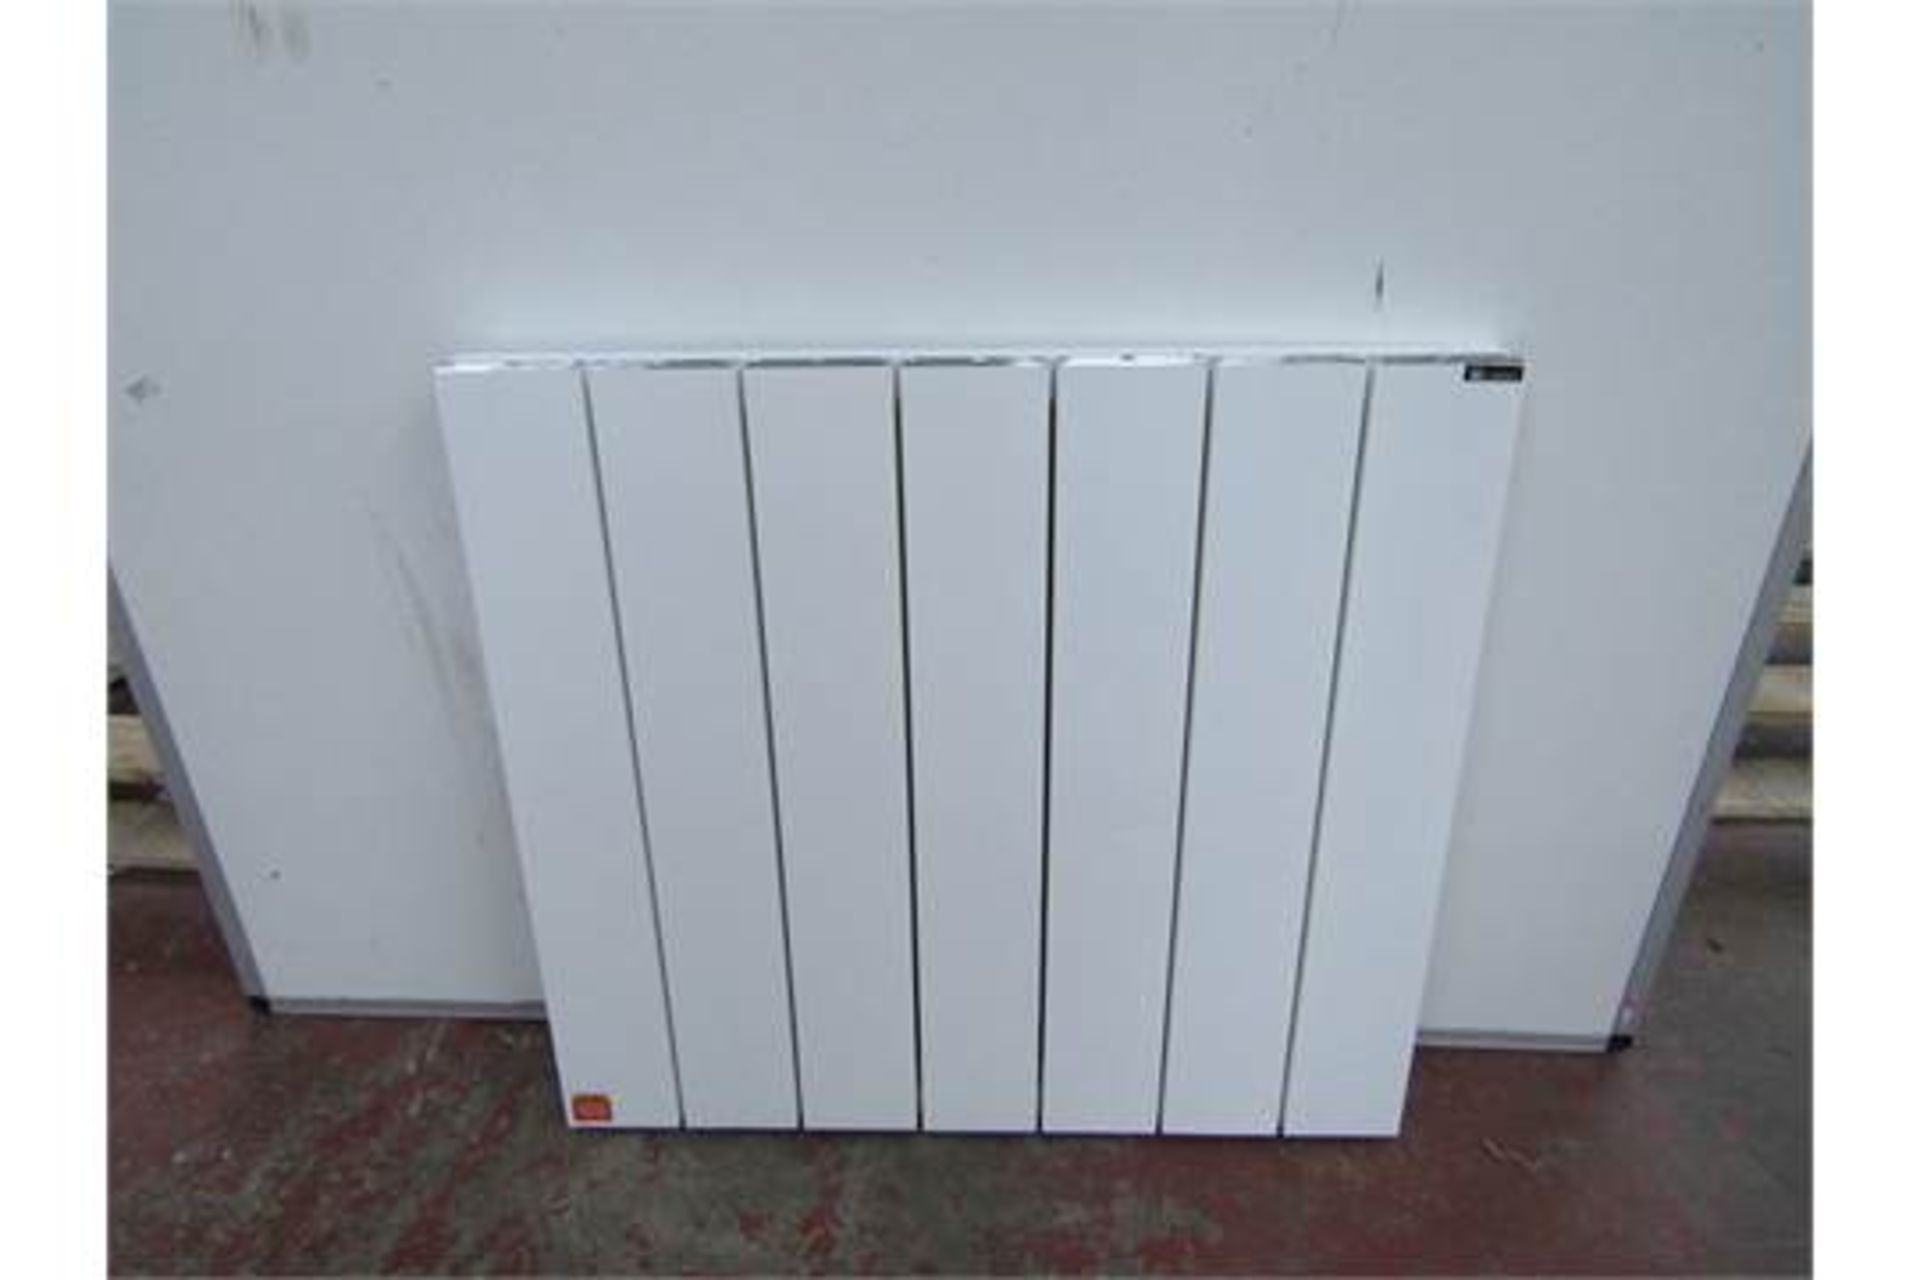 Carisa Nemo aluminium radiator, 660mm x 600mm, white colour. No fixings and boxed.  RRP £251.10